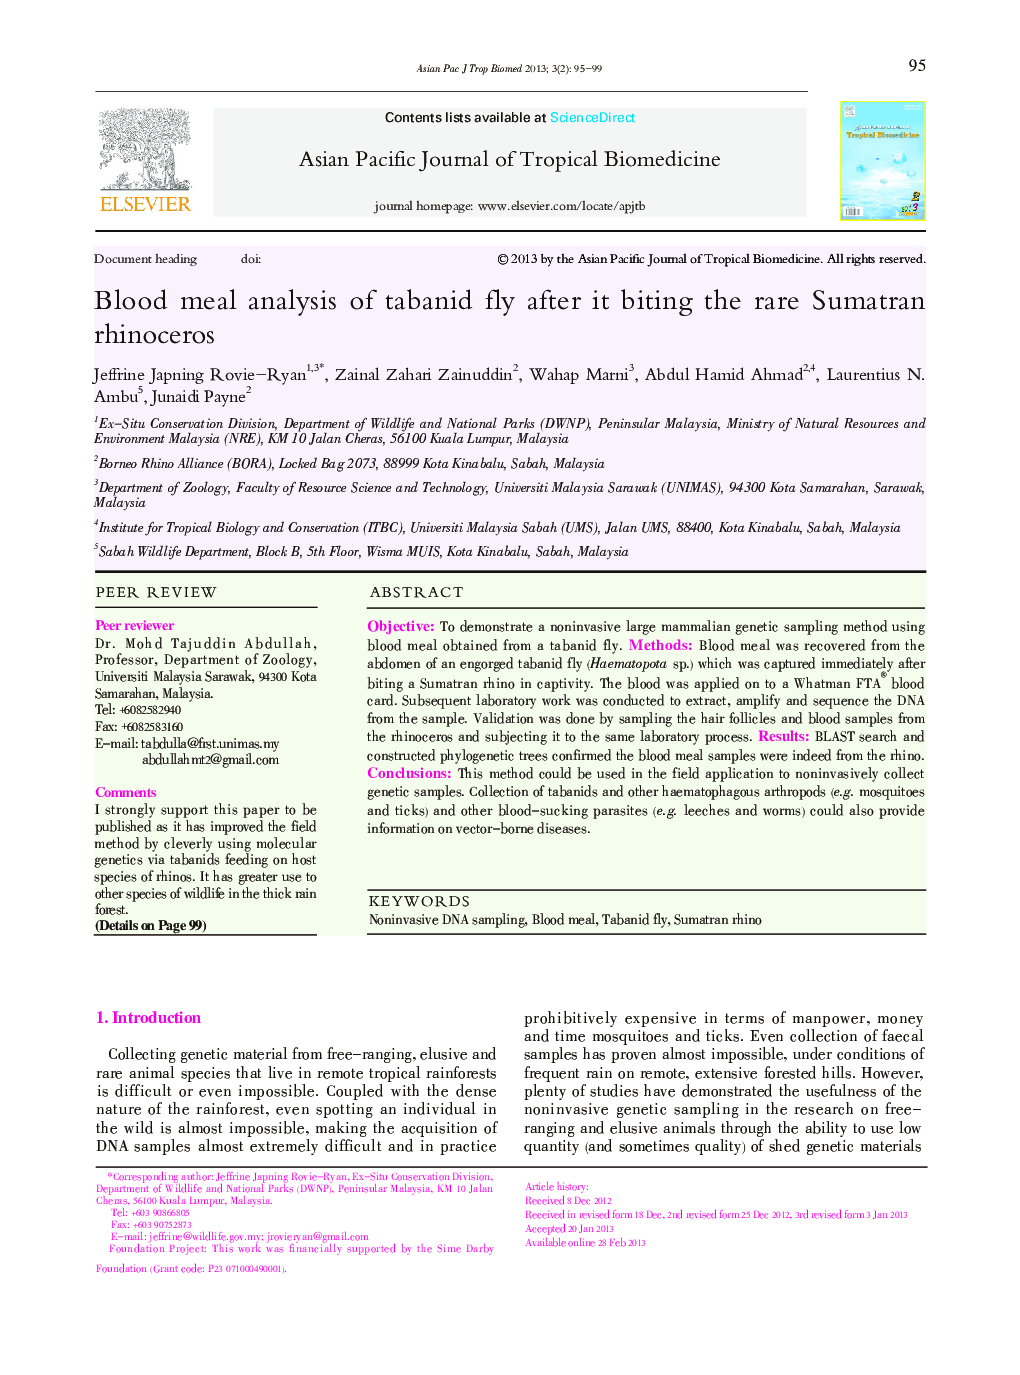 Blood meal analysis of tabanid fly after it biting the rare Sumatran rhinoceros